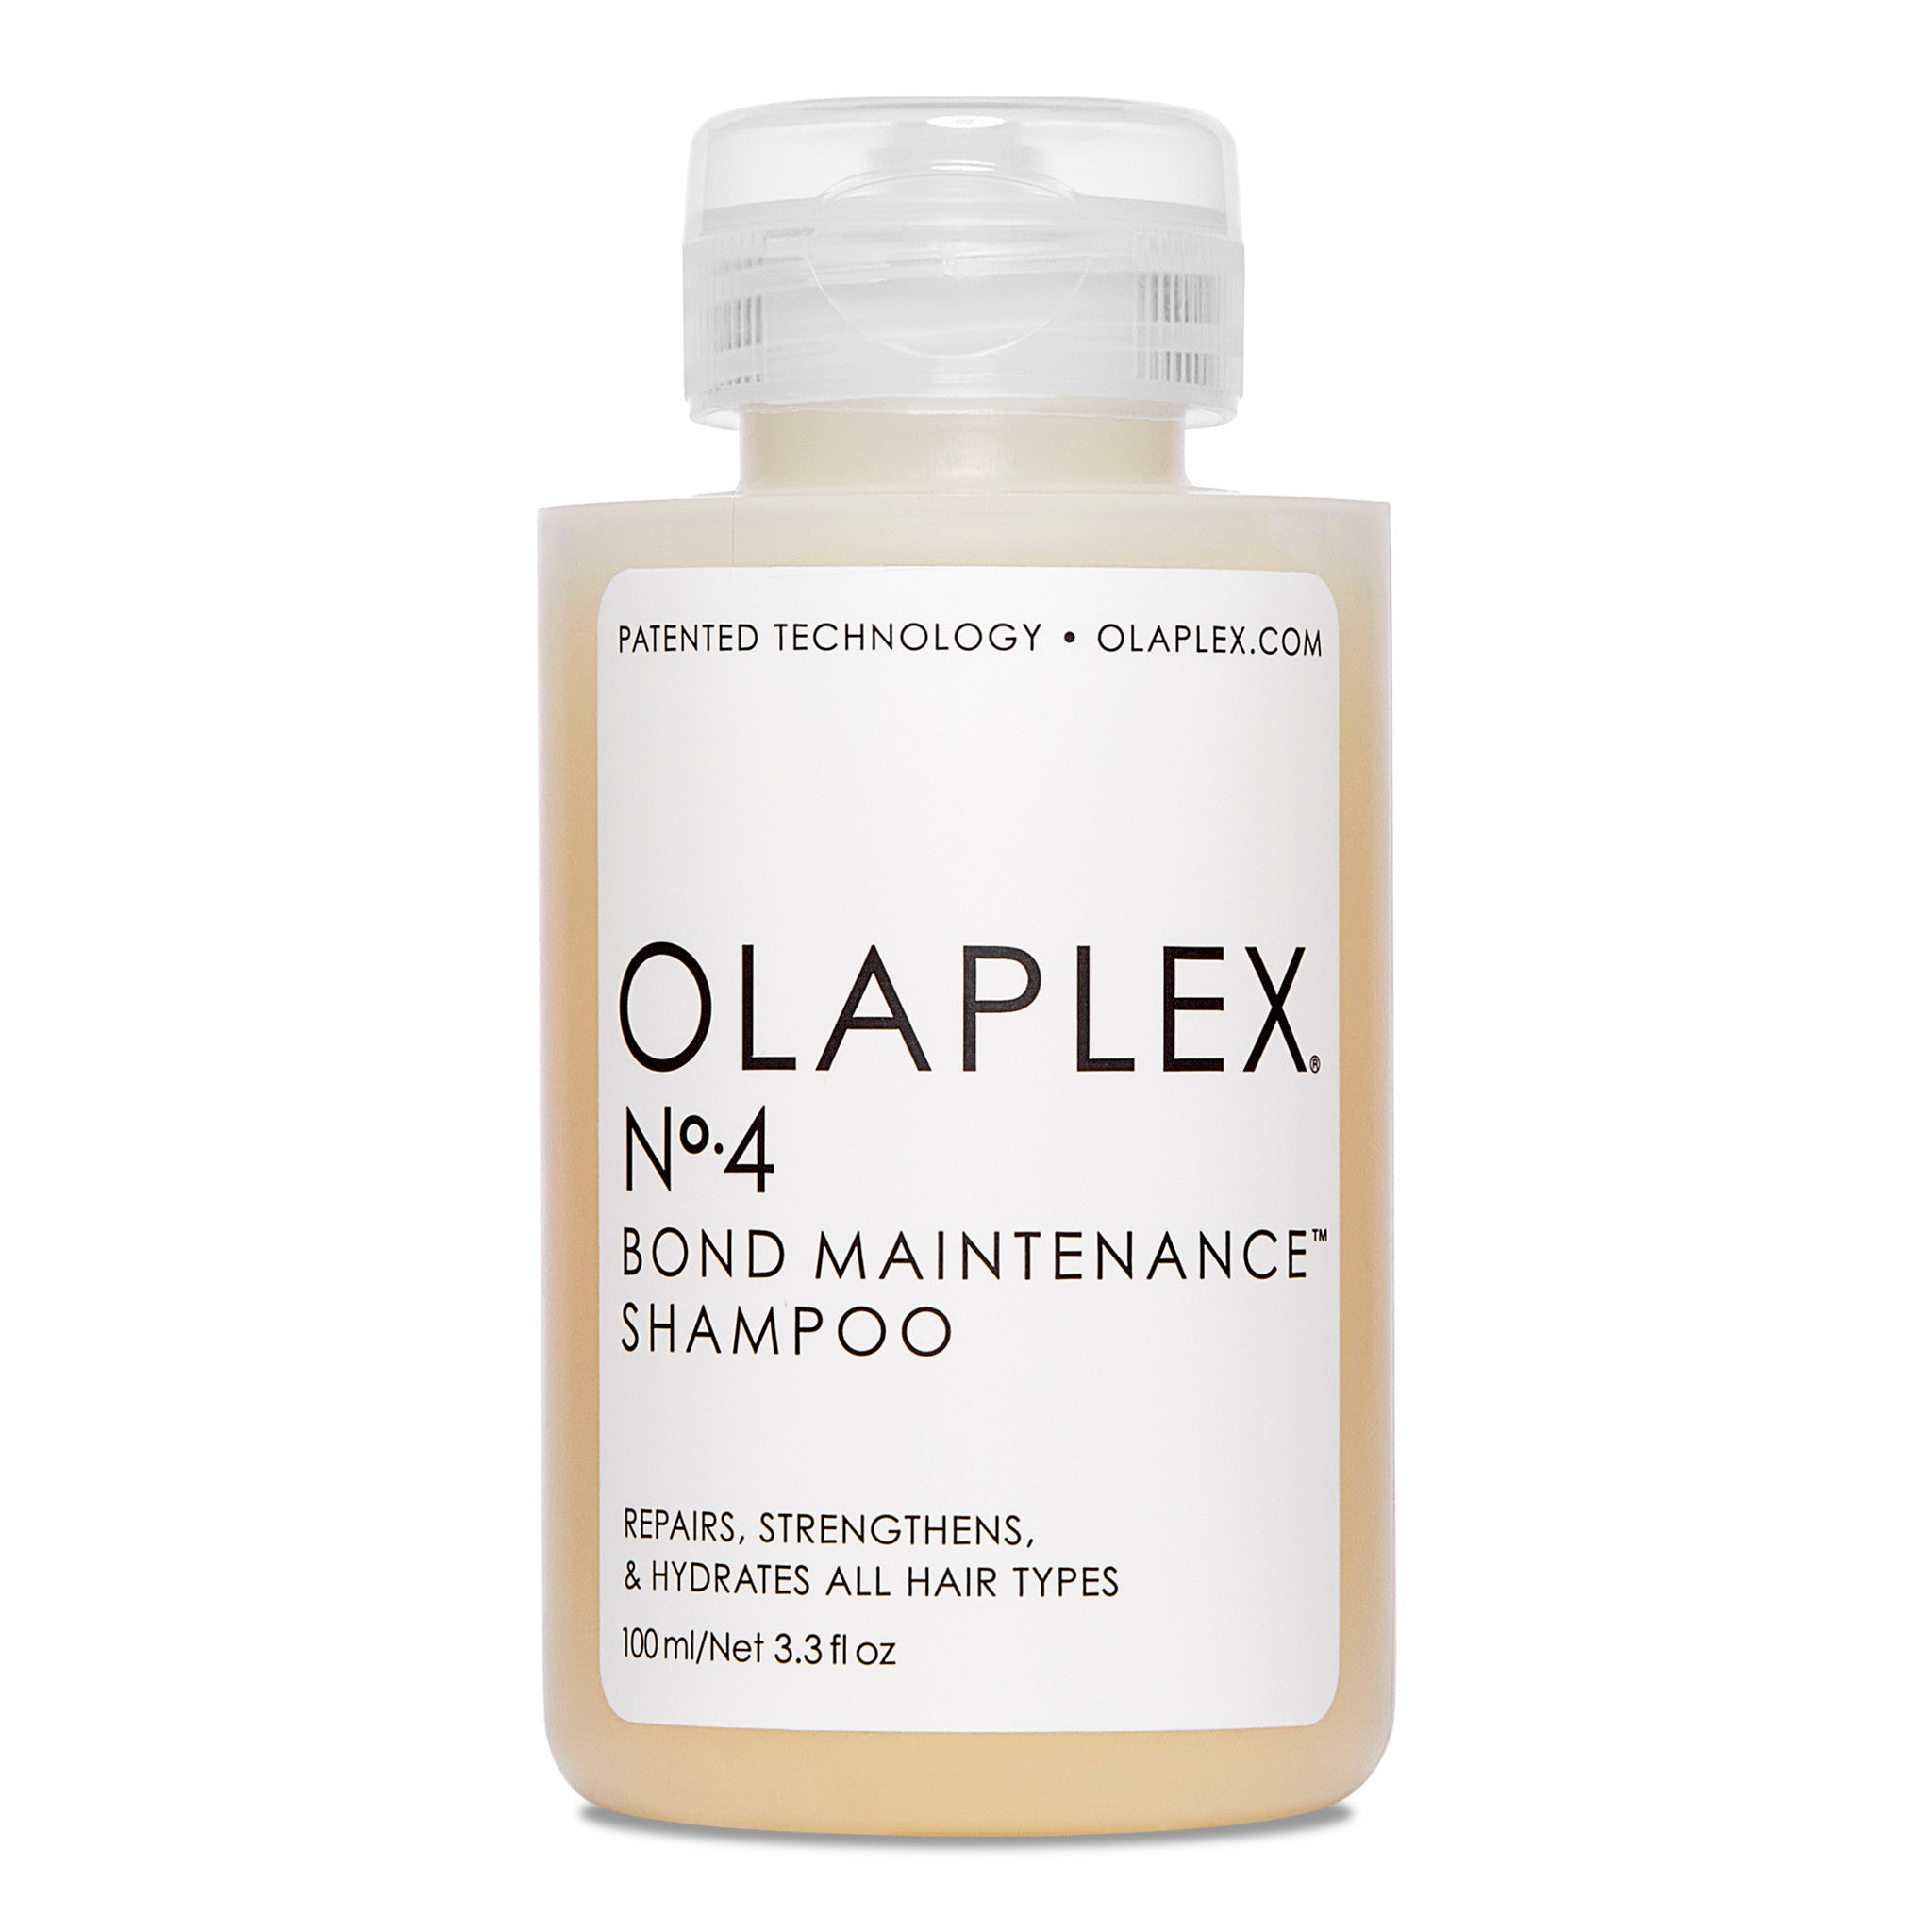 Olaplex No.4 Bond Maintenance Shampoo Size variant: 3.3 fl oz | 100 ml main image. This product is for black hair